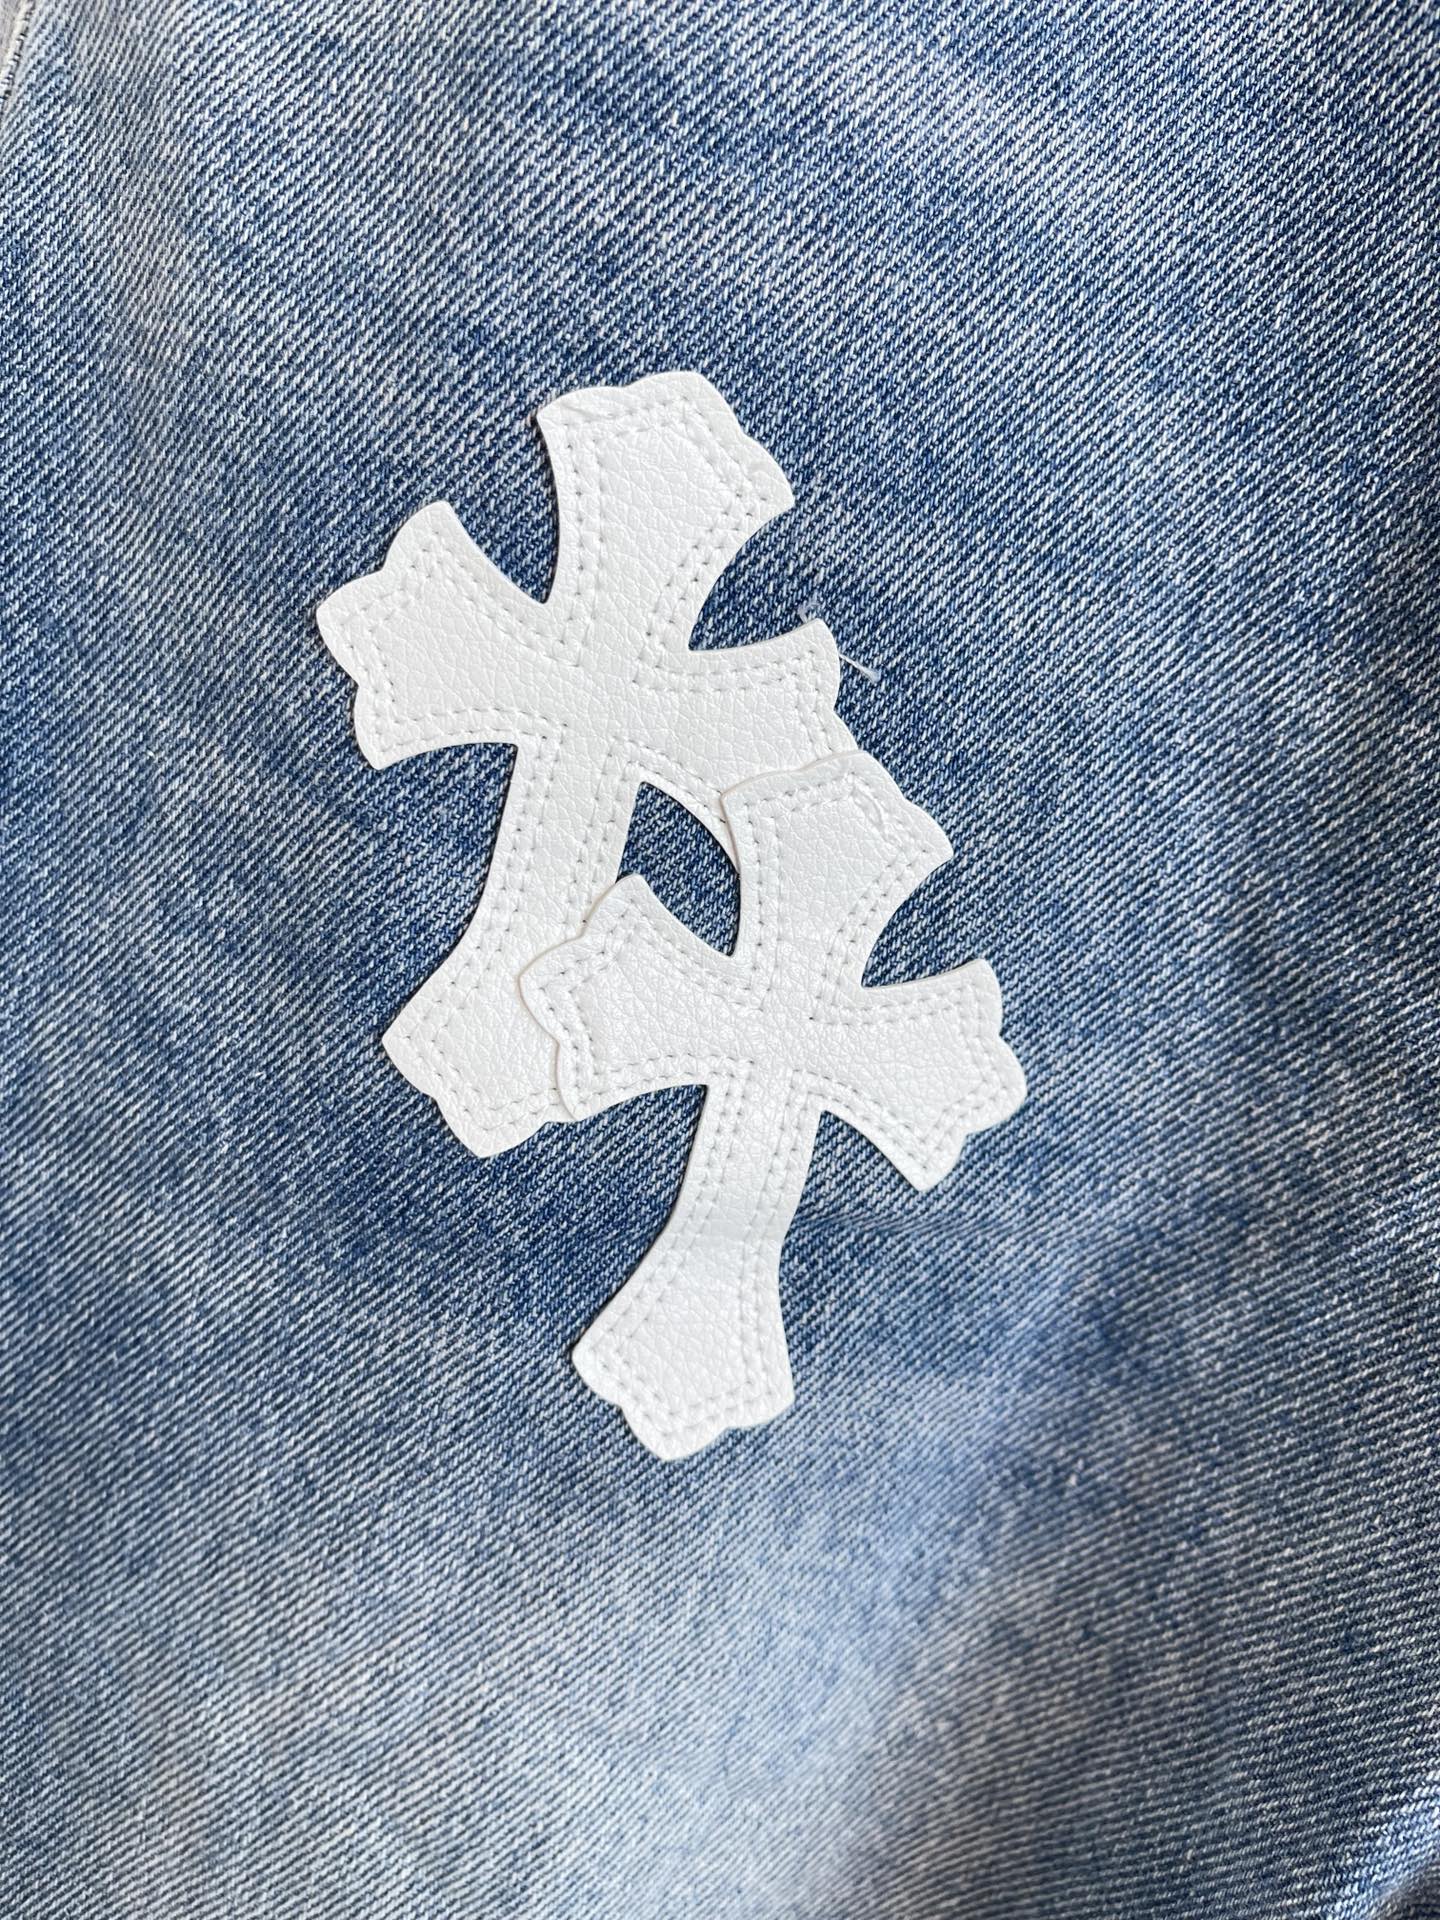 Replica chrome hearts rep/lemandik white cross jeans - Depop